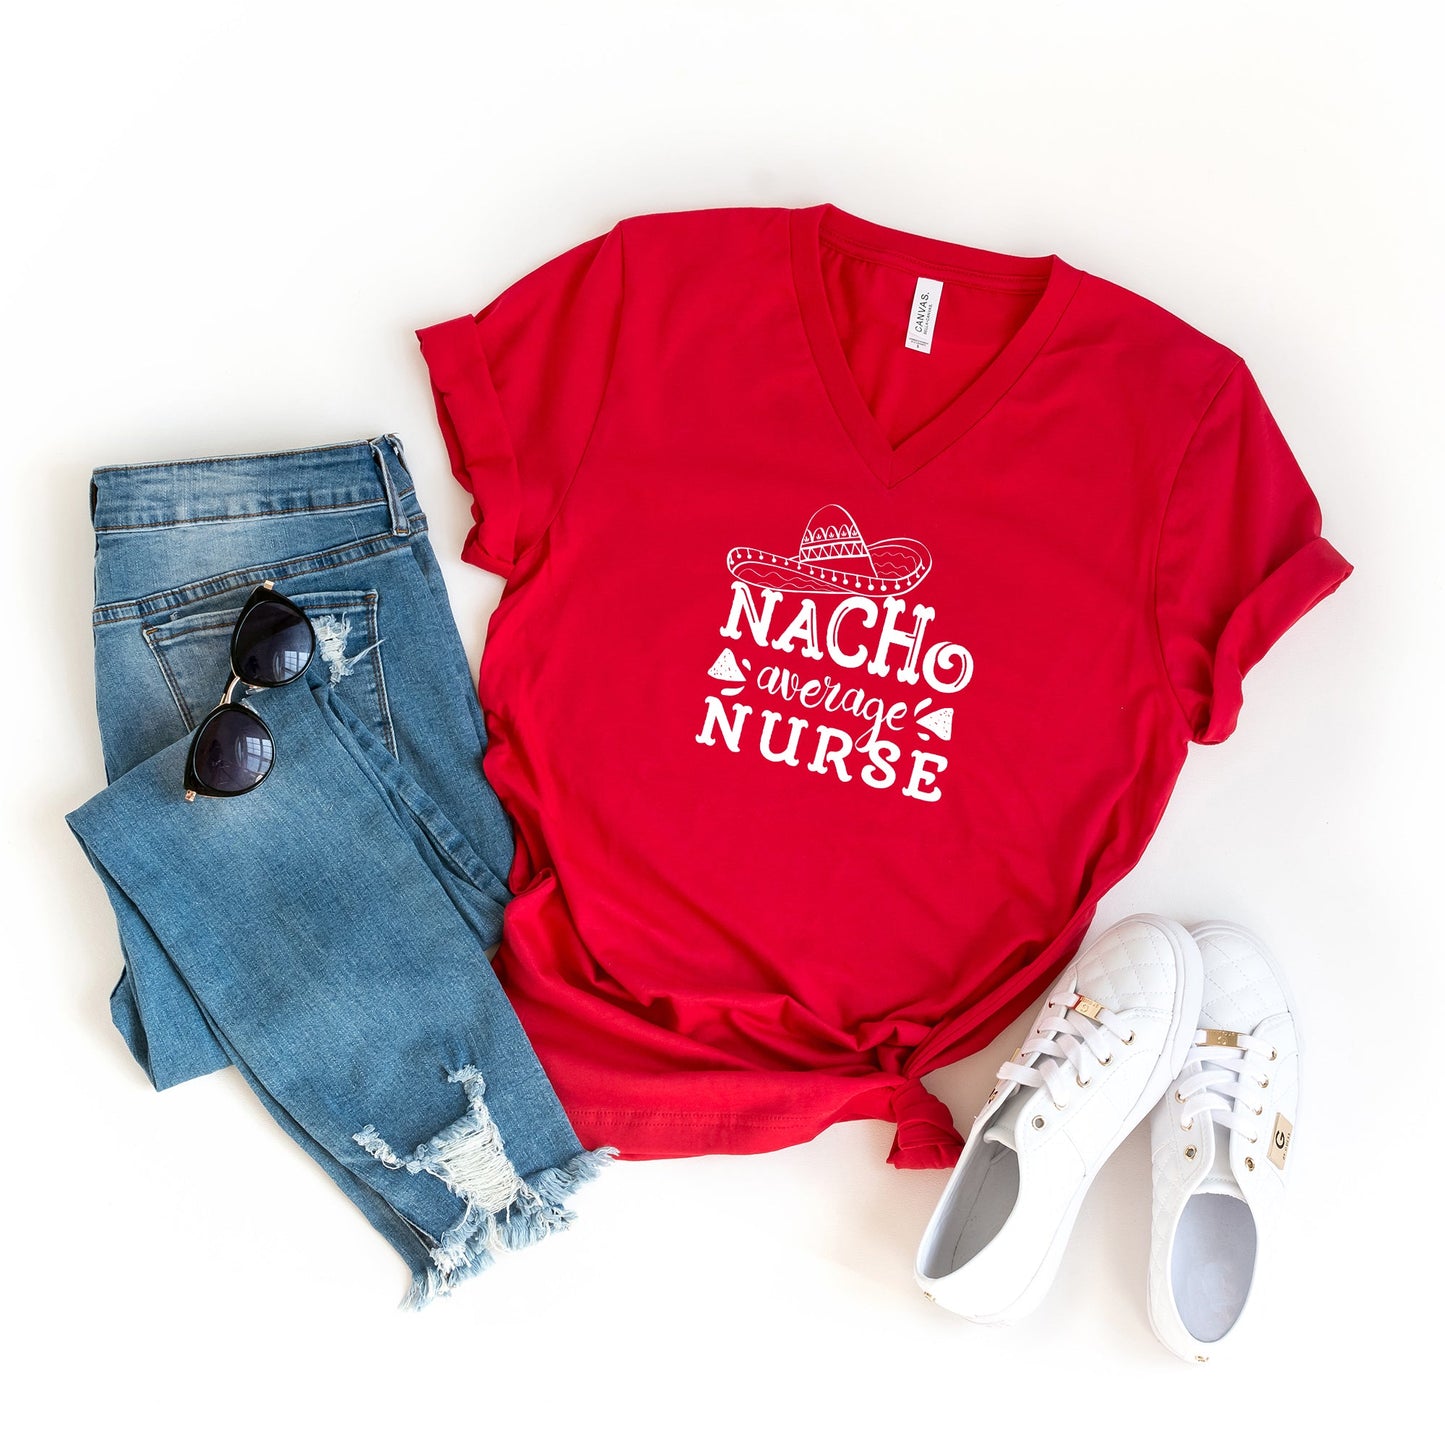 Nacho Average Nurse | V-Neck Graphic Tee